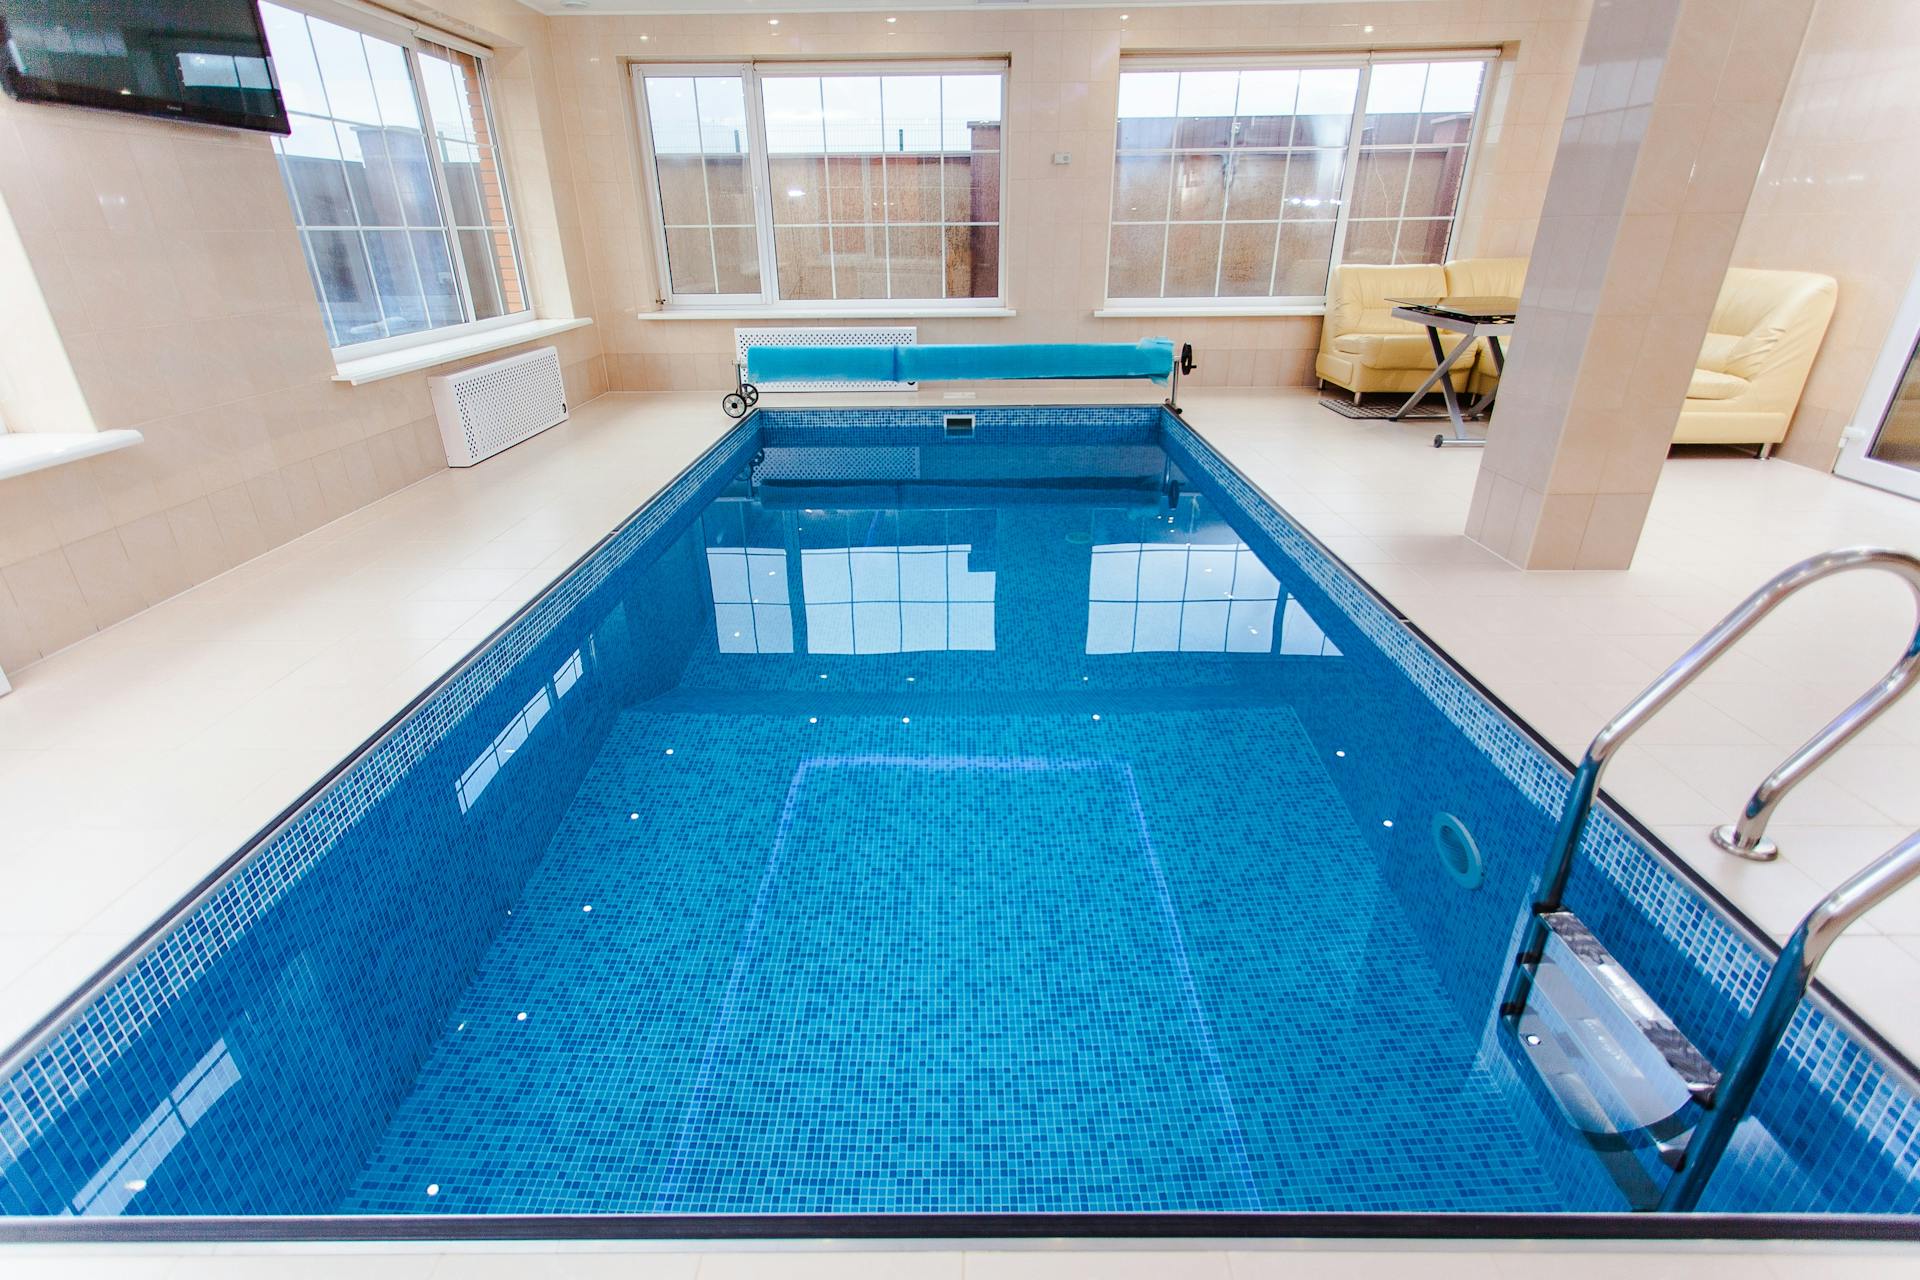 An indoor swimming pool | Source: Pexels